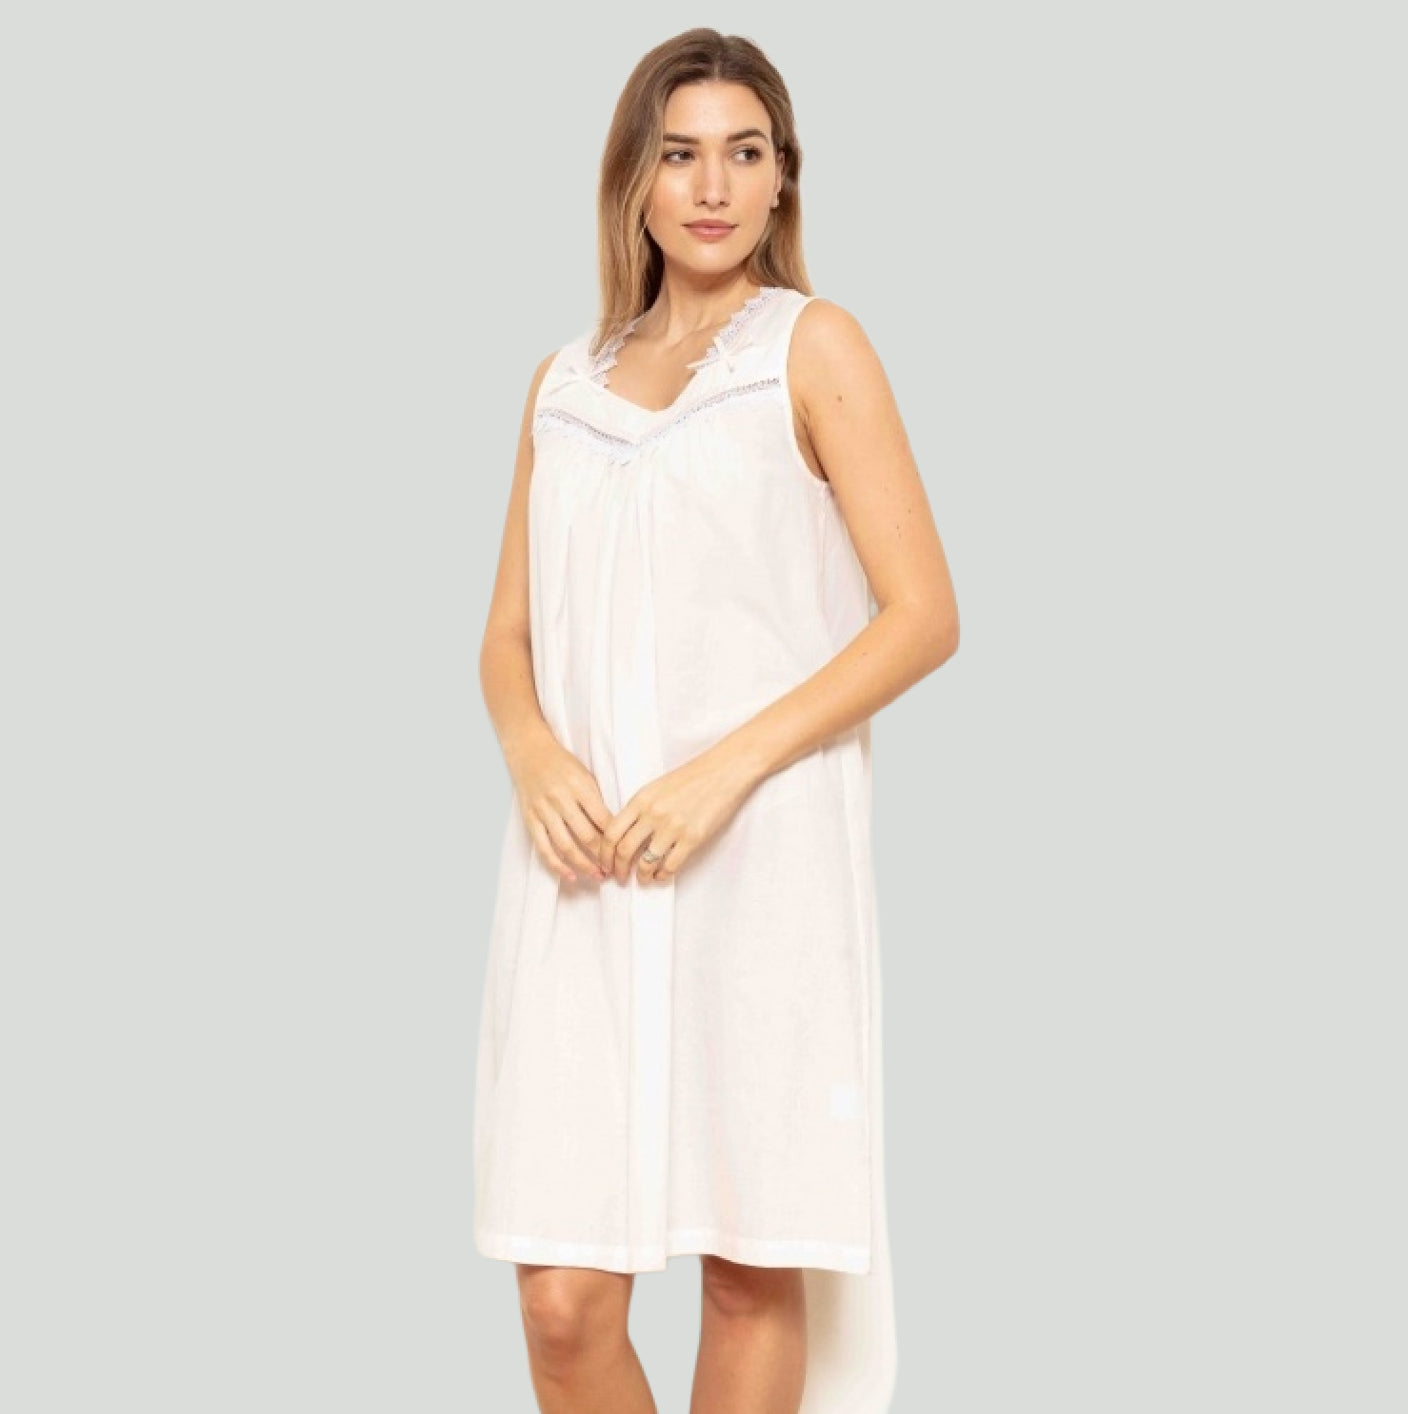 Reta 100% Cotton Sleeveless Nightdress in 3 colours White, Blue, Pink